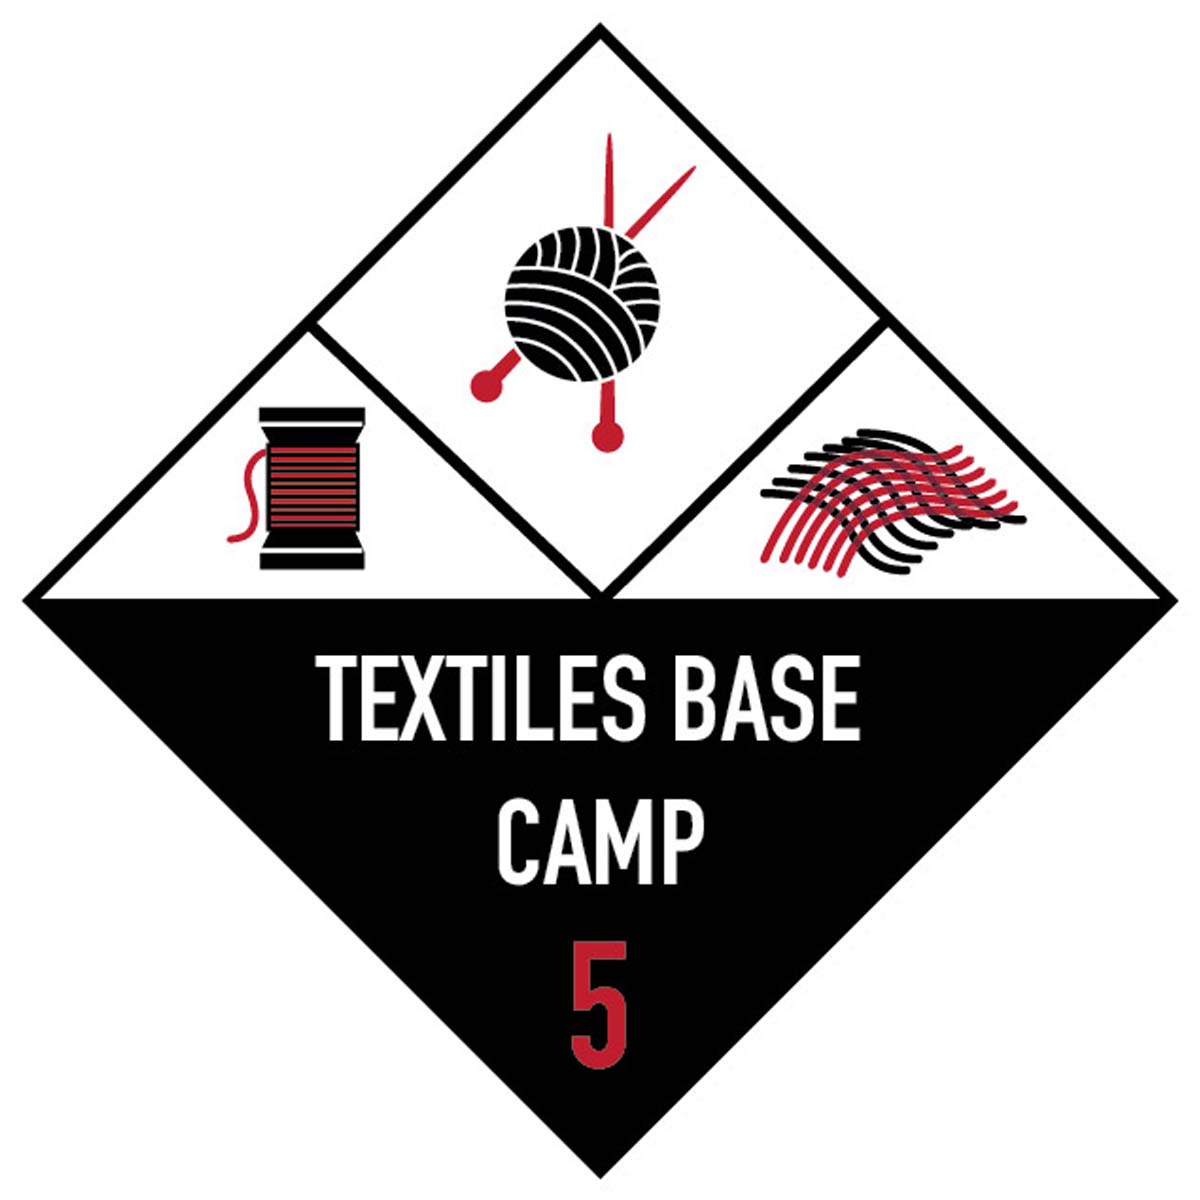 Textiles base camp graphic